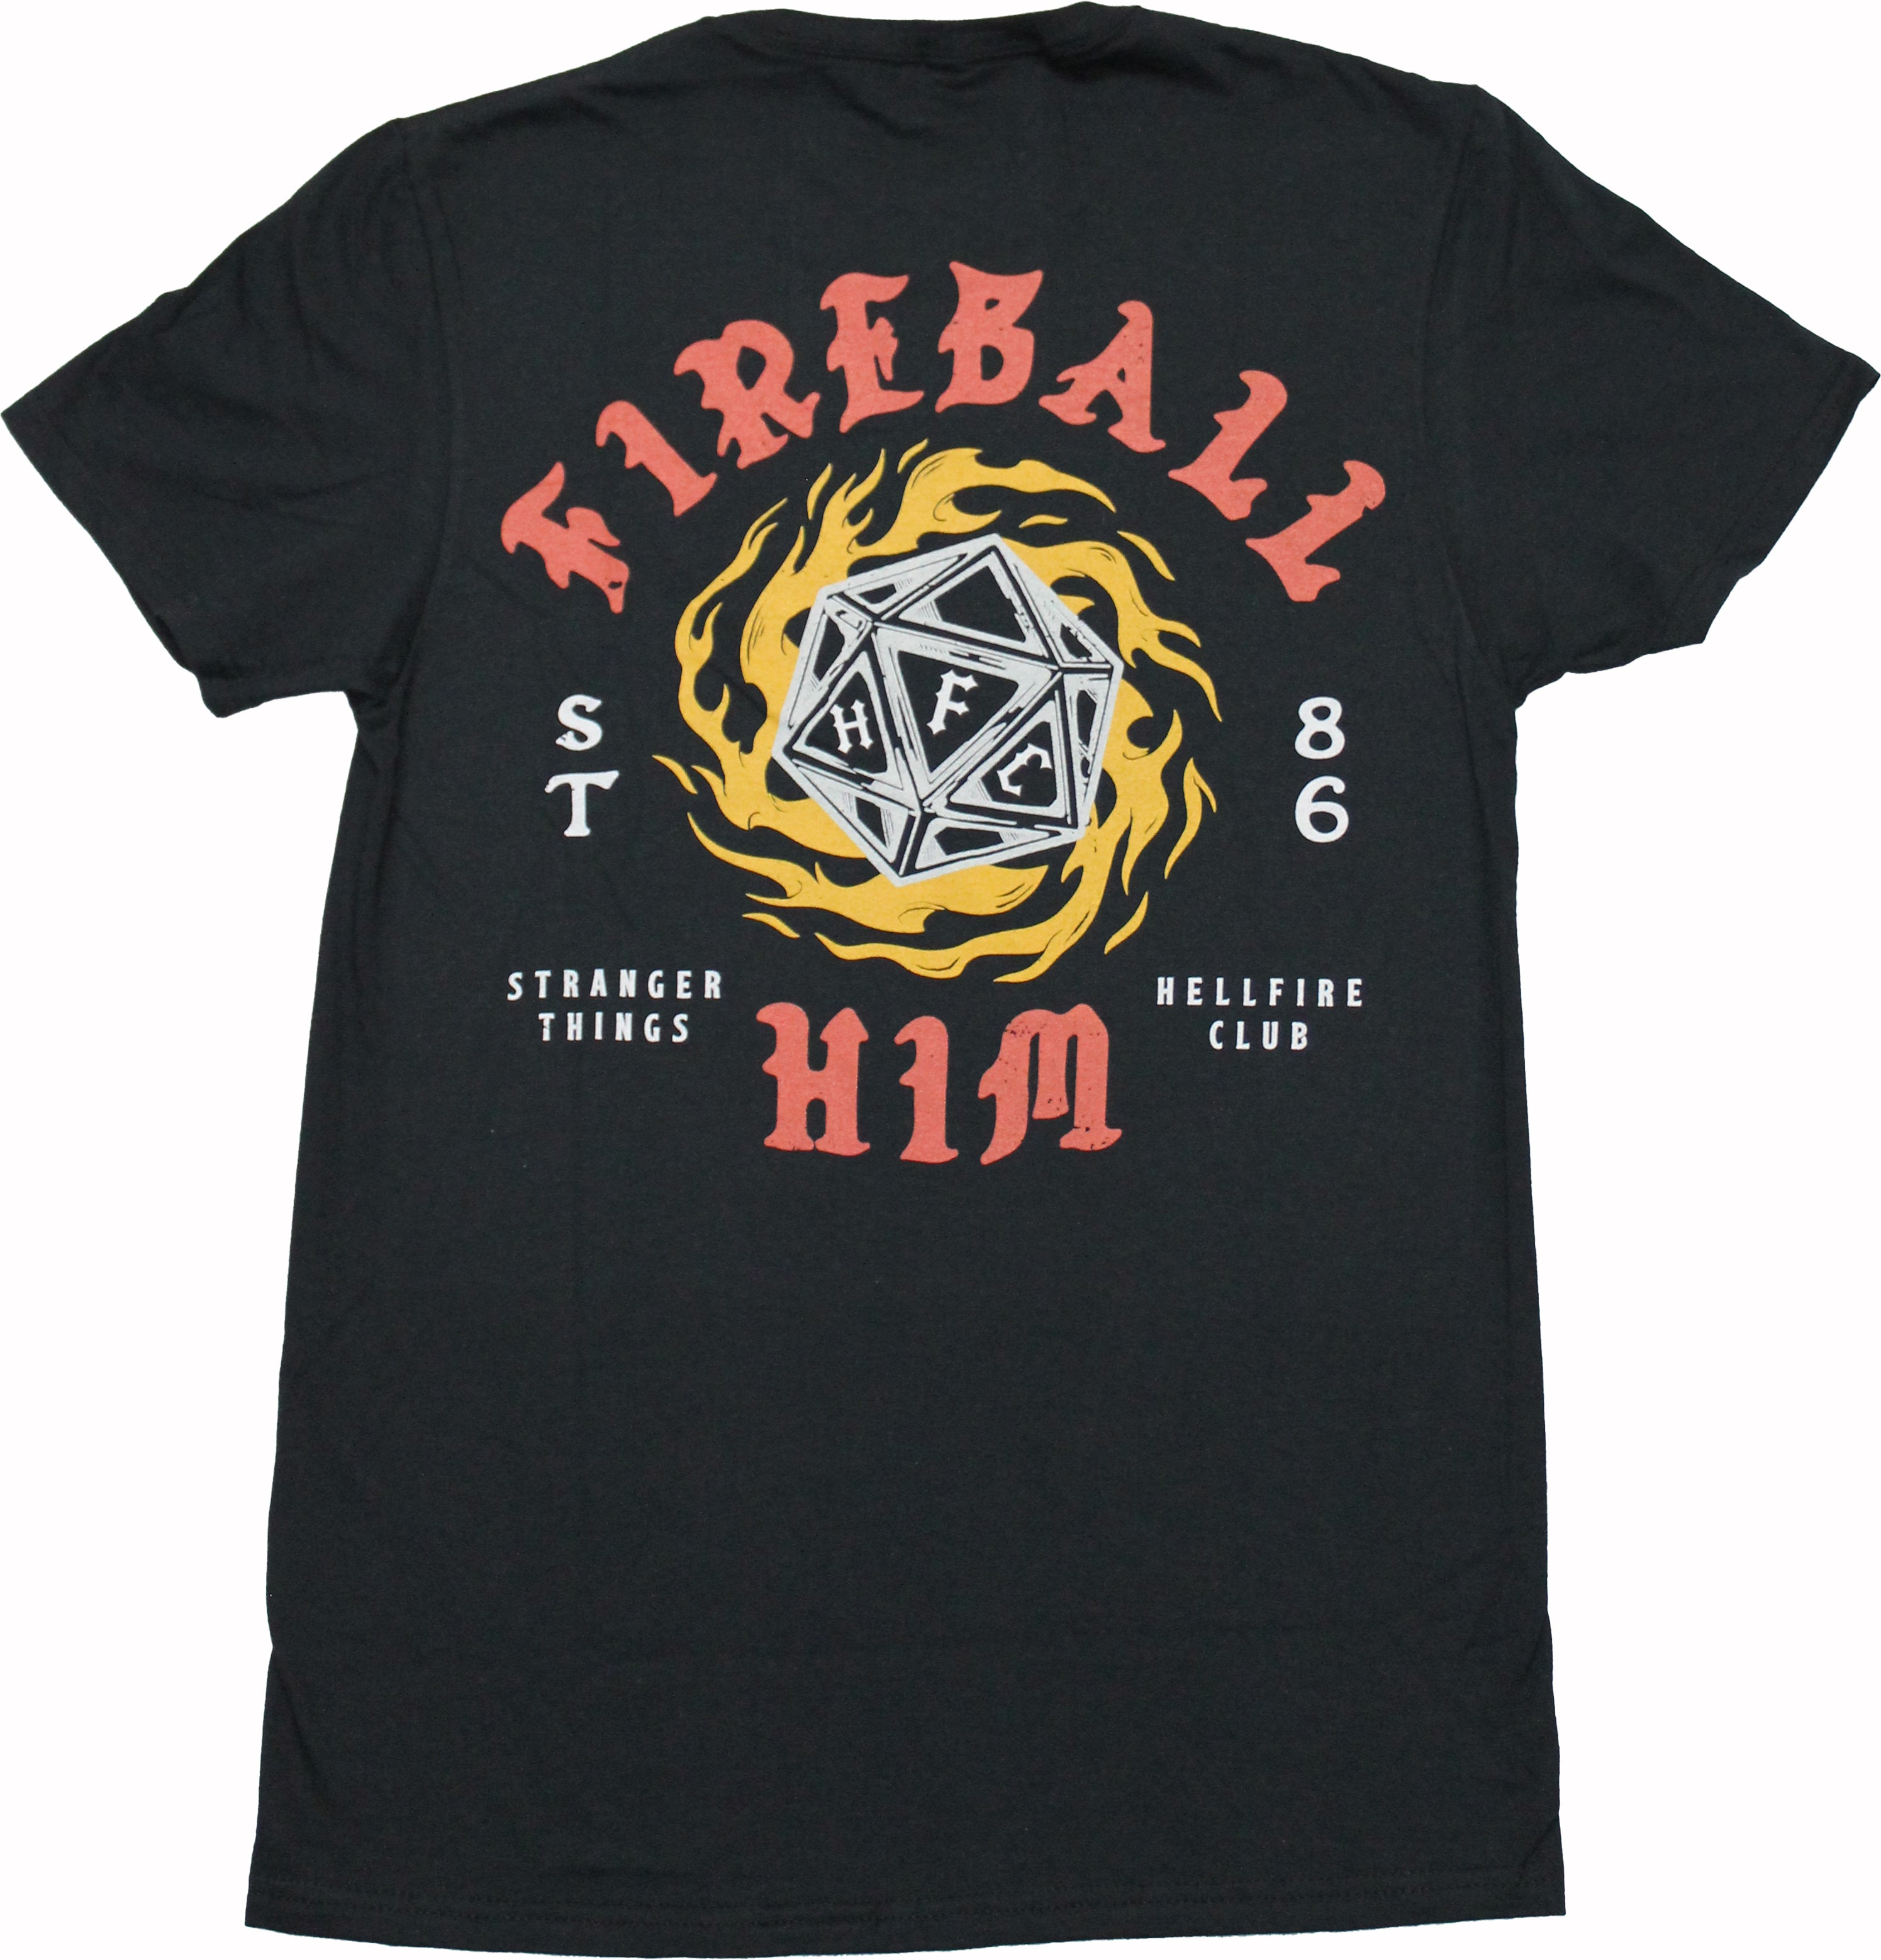 Stranger Things Mens T-Shirt - Hellfire Club Lapel Fireball Him Back